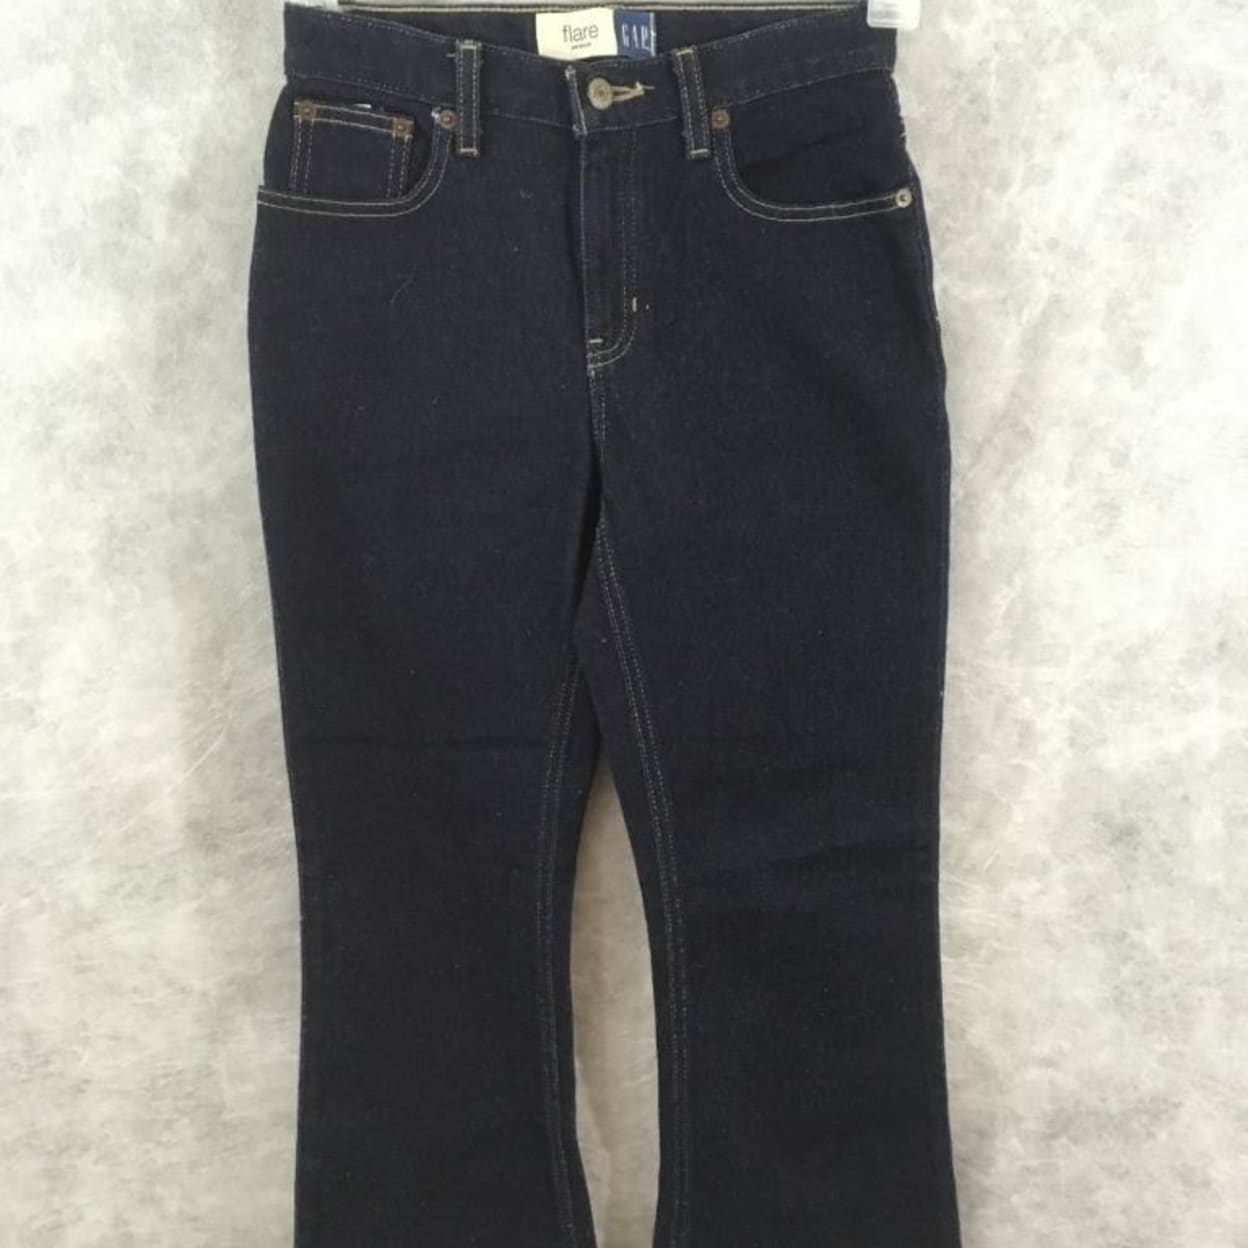 gap jeans size 12